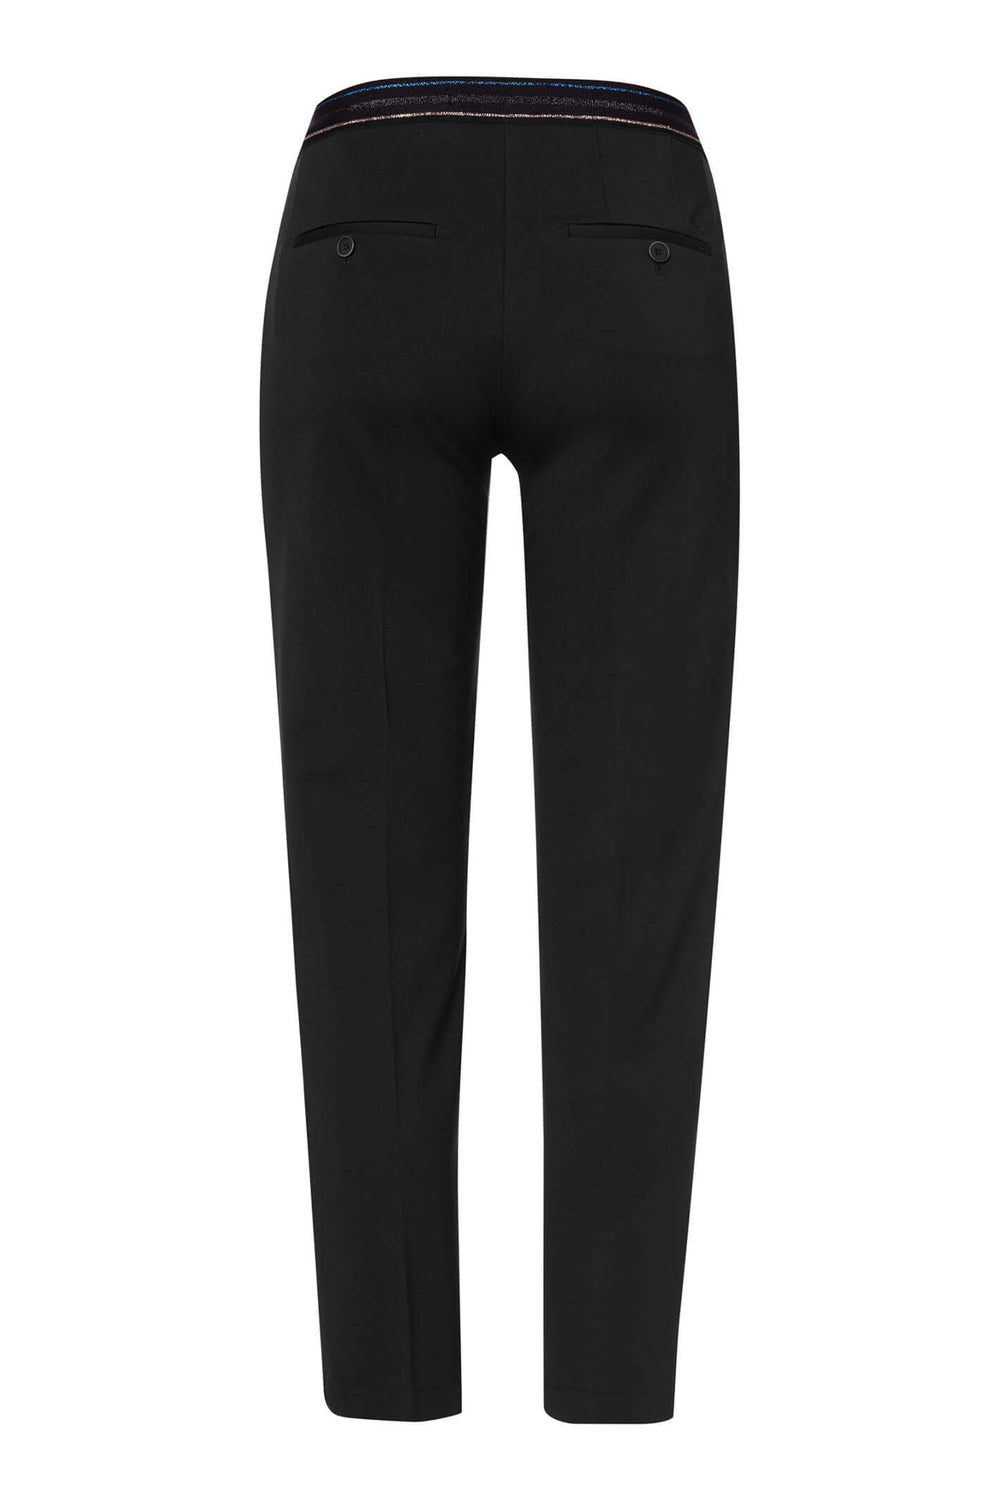 Brax Maron 75-5657/02 Black 7/8 Flat Front Trousers - Shirley Allum Boutique